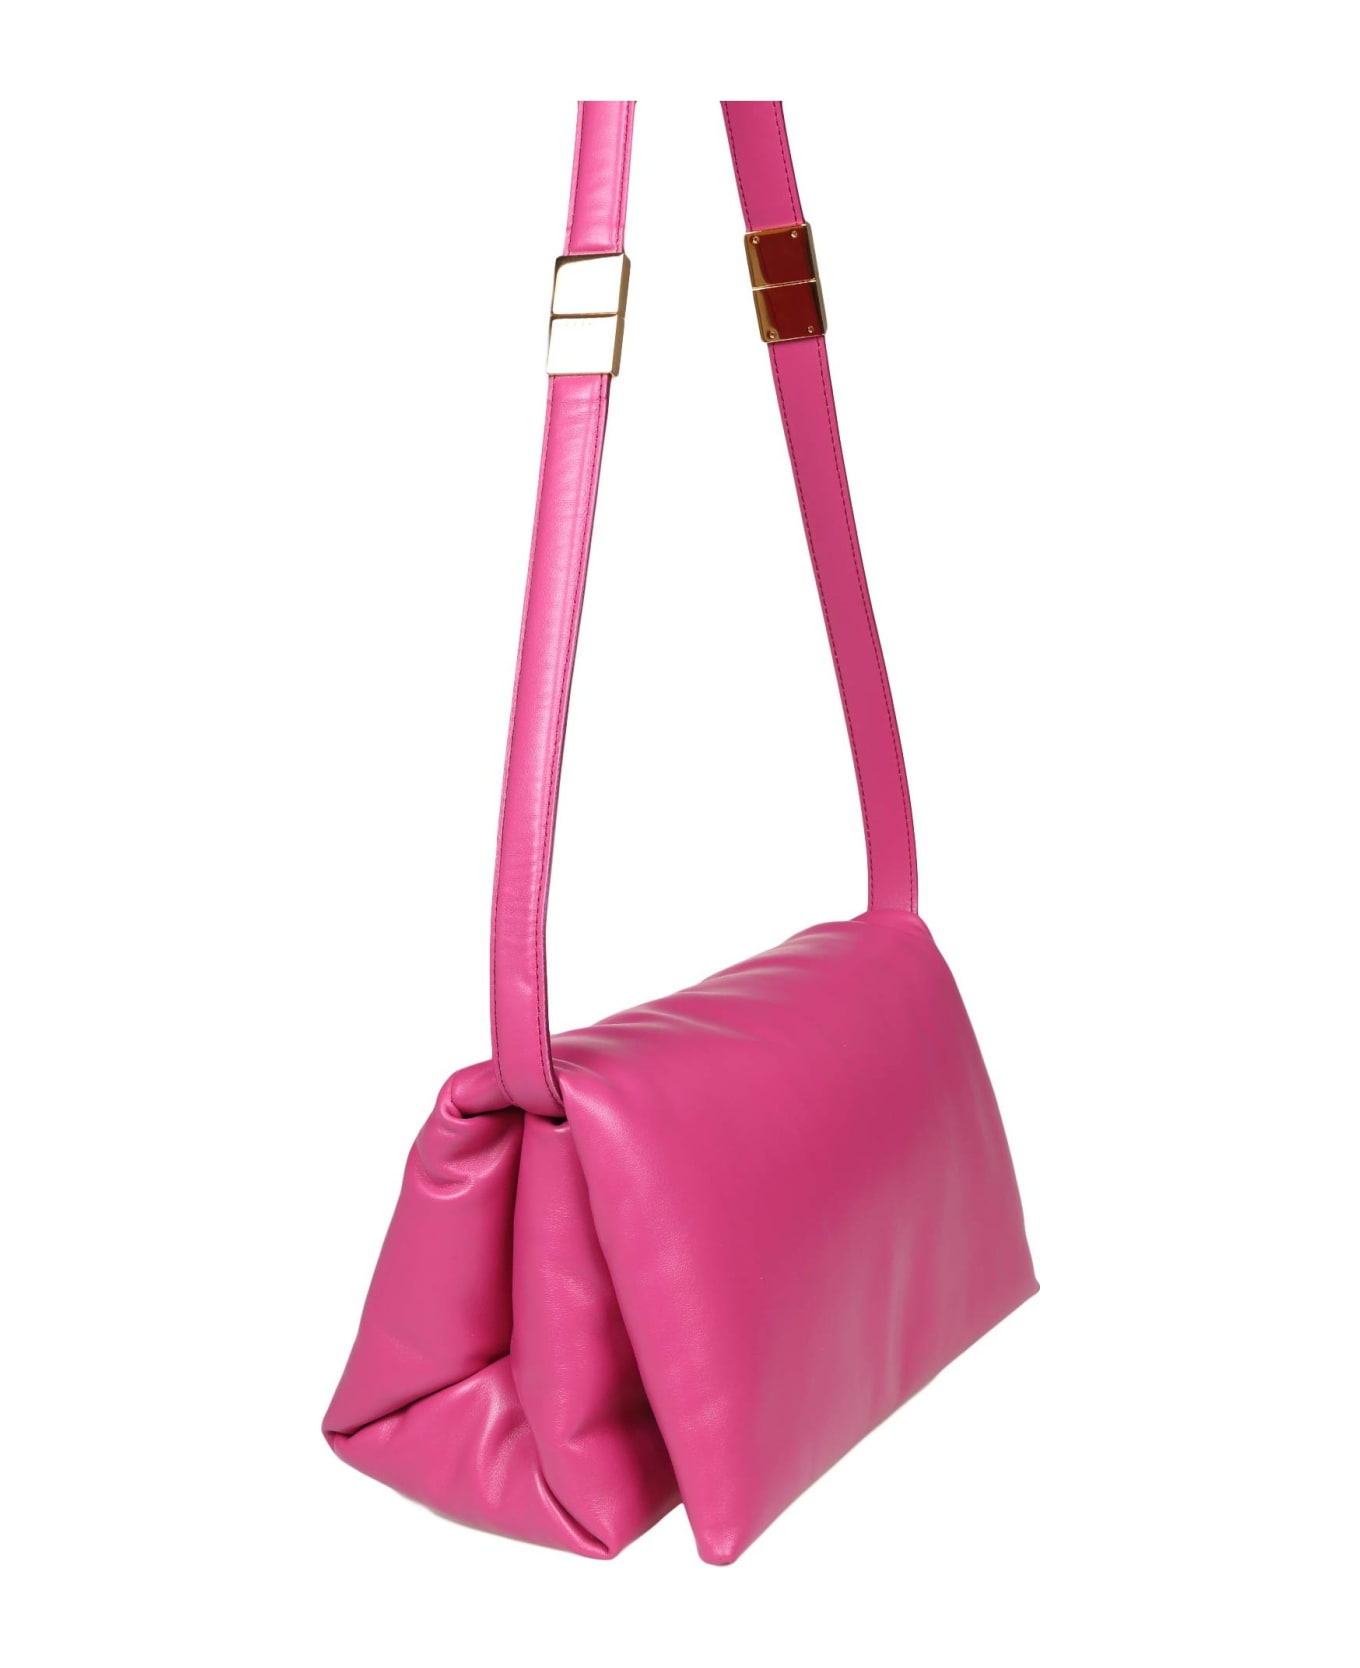 Marni Prisma Shoulder Bag In Fuchsia Color Leather - PINK